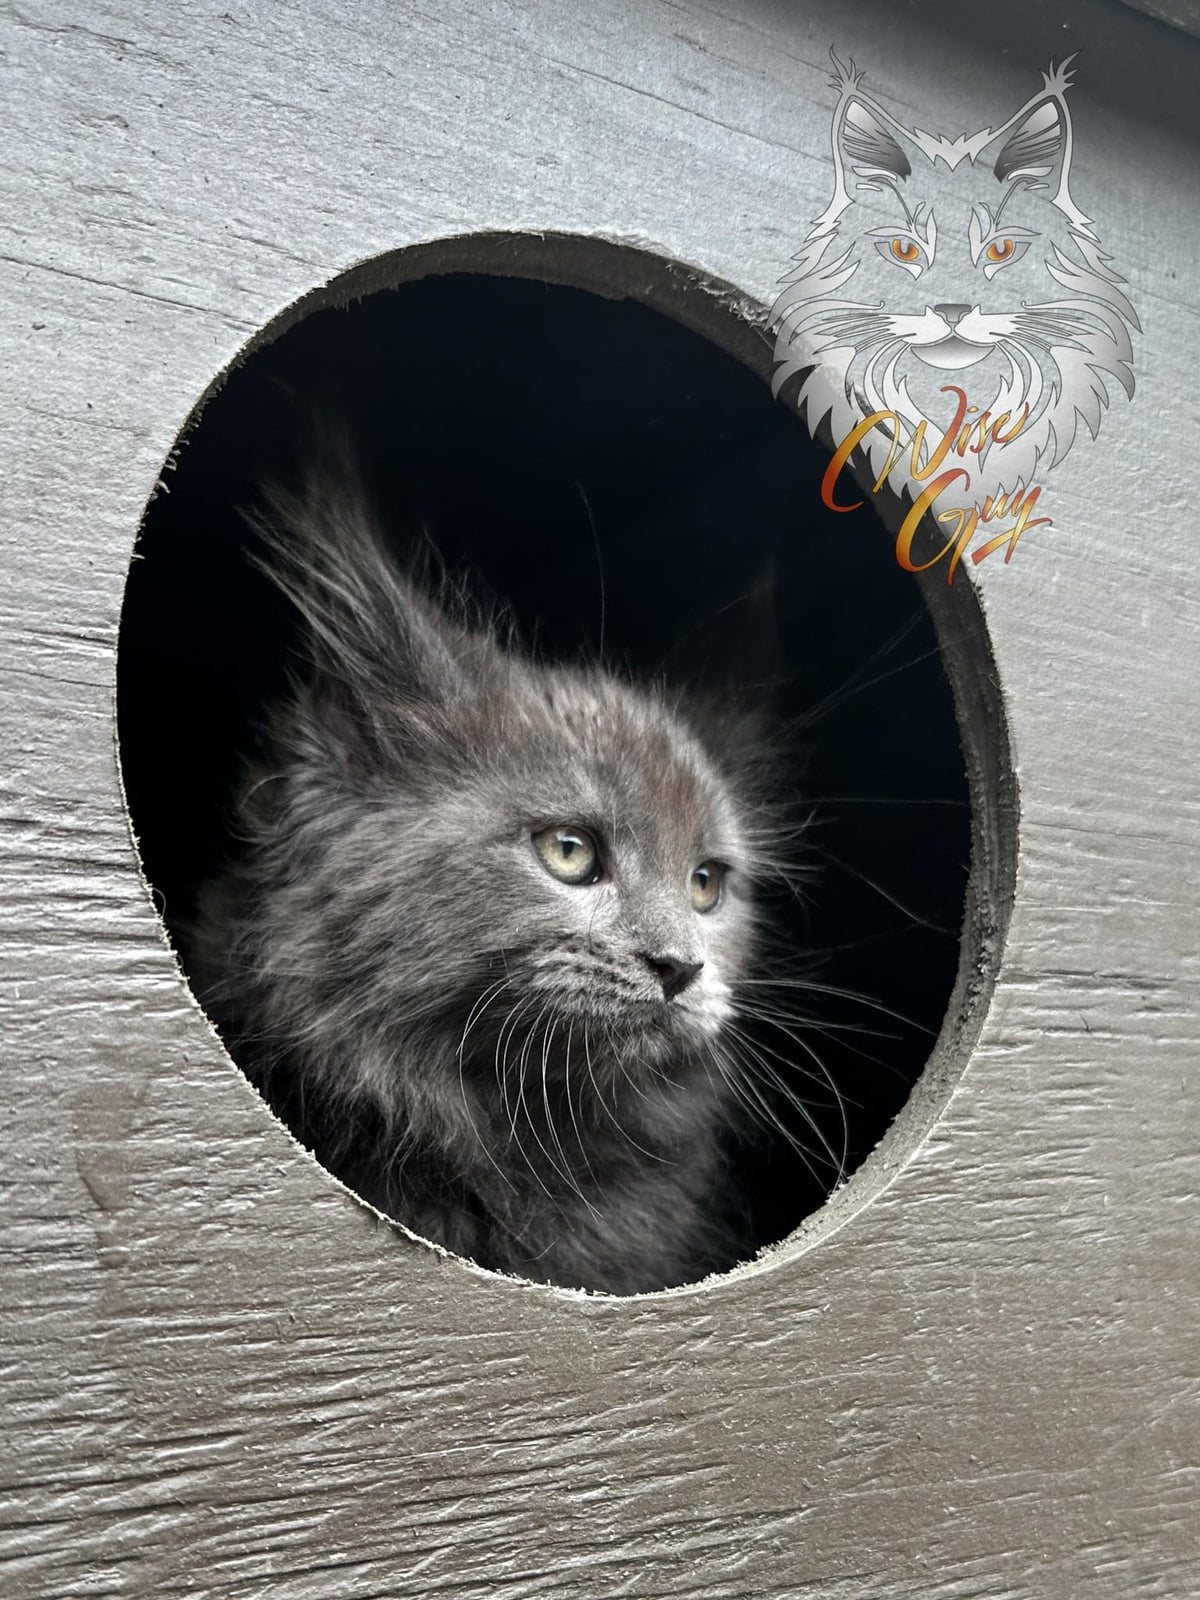 Blue kitten looking through a dark circular hole.